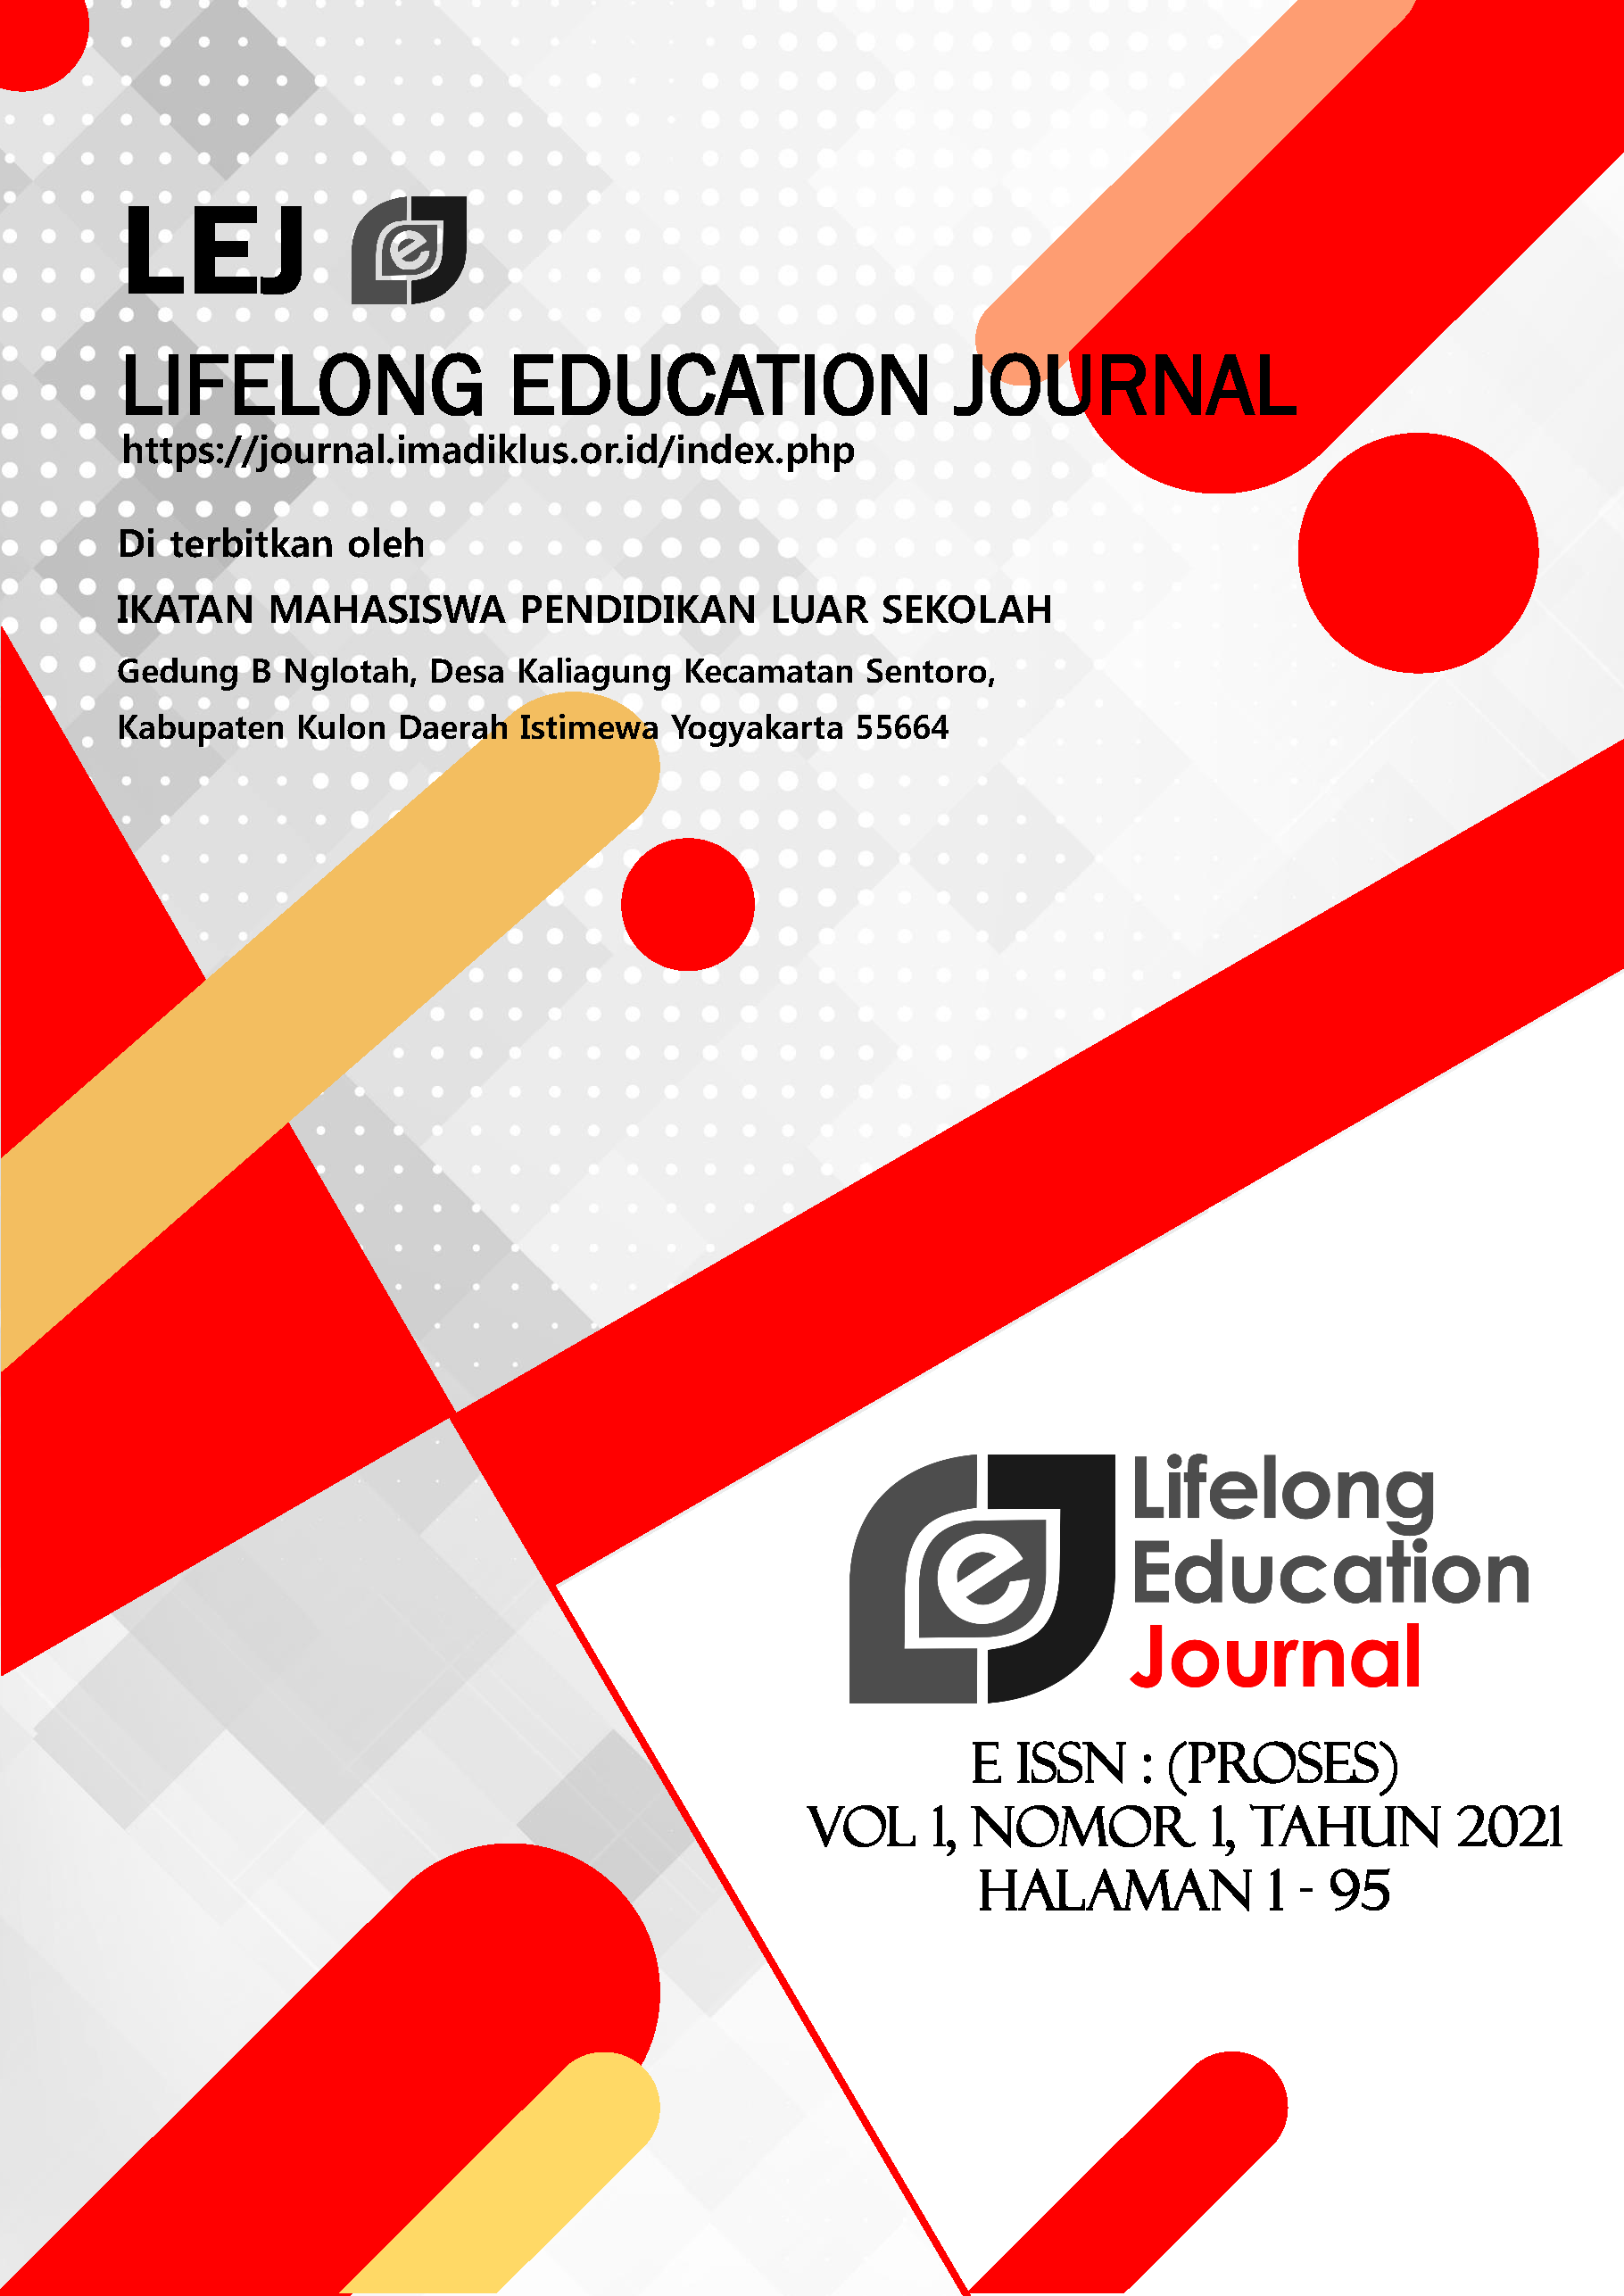 Lifelong Education Journal